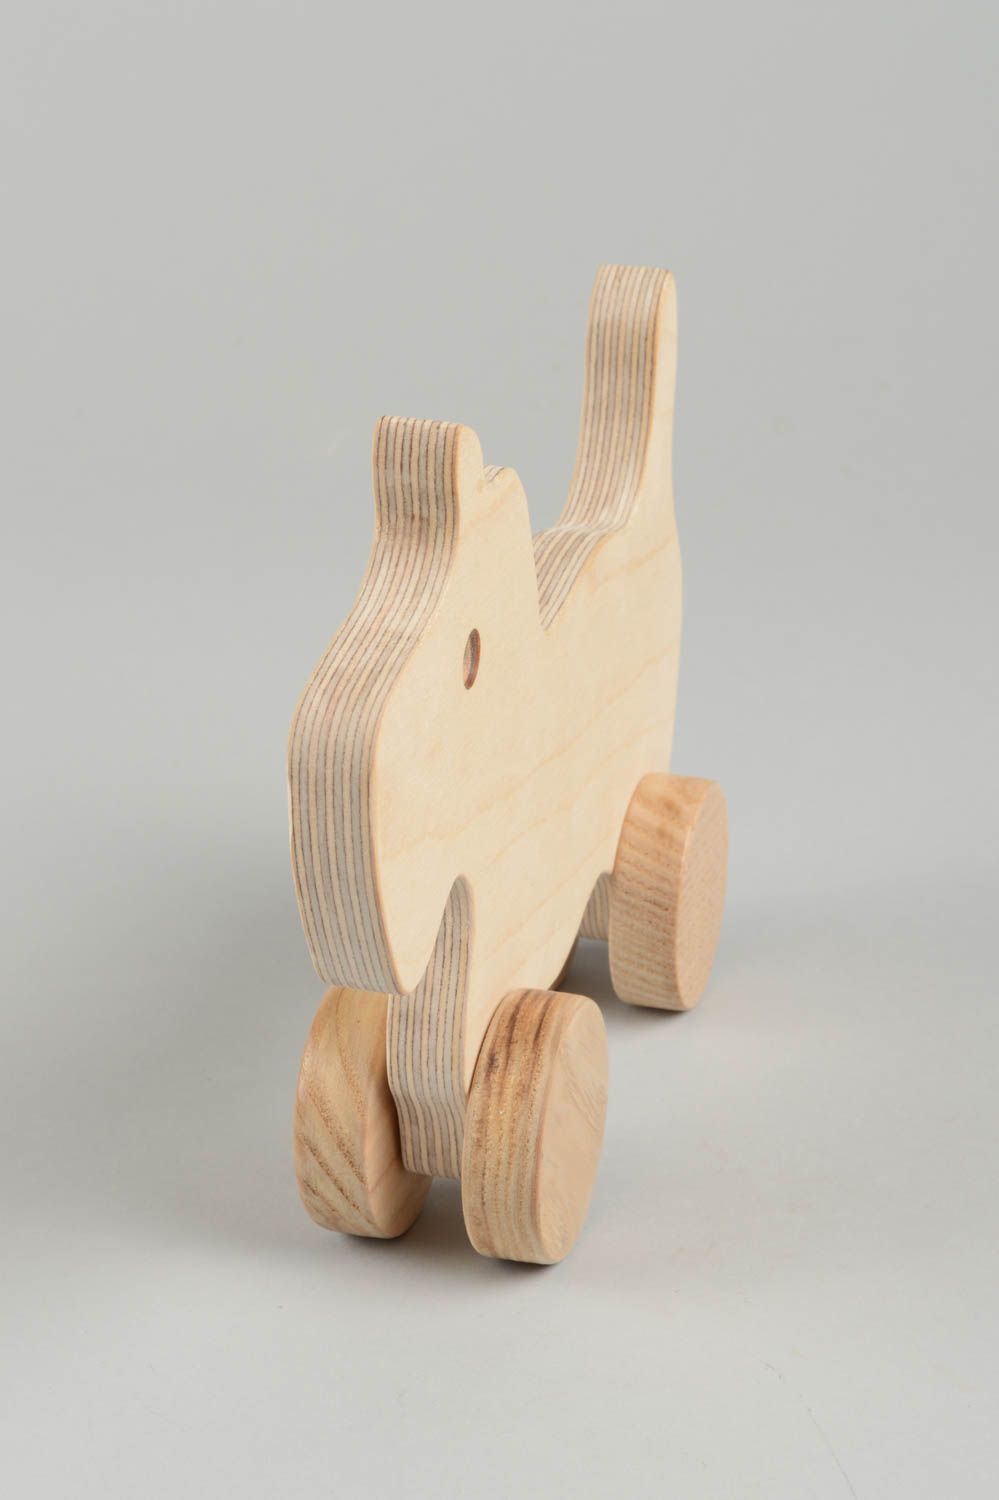 Handmade designer wooden toy unusual designer toy eco friendly toy for kids photo 4